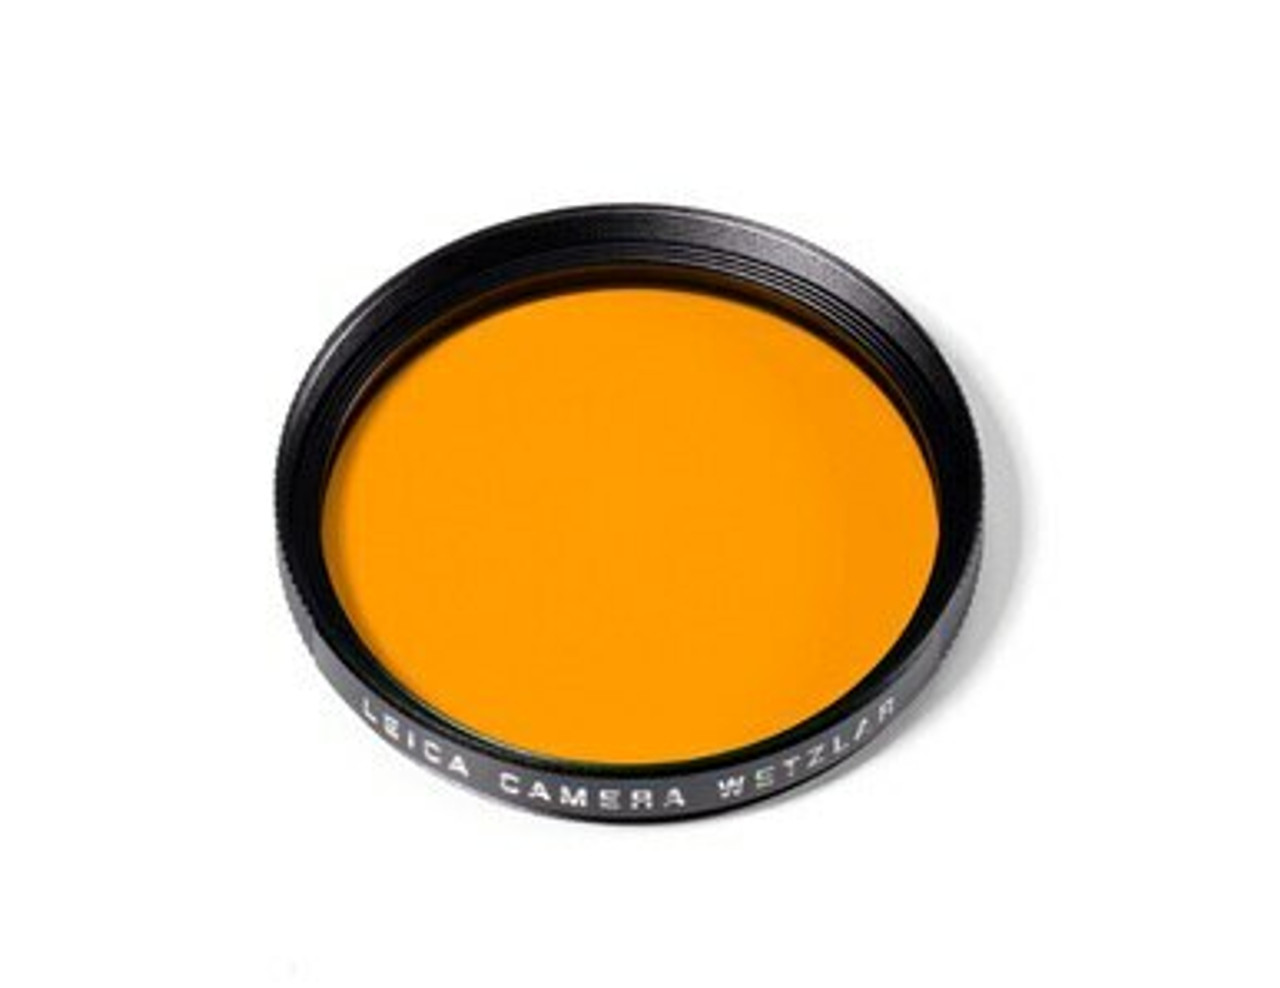 Leica E49 49mm UVa II Glass Filter, Black